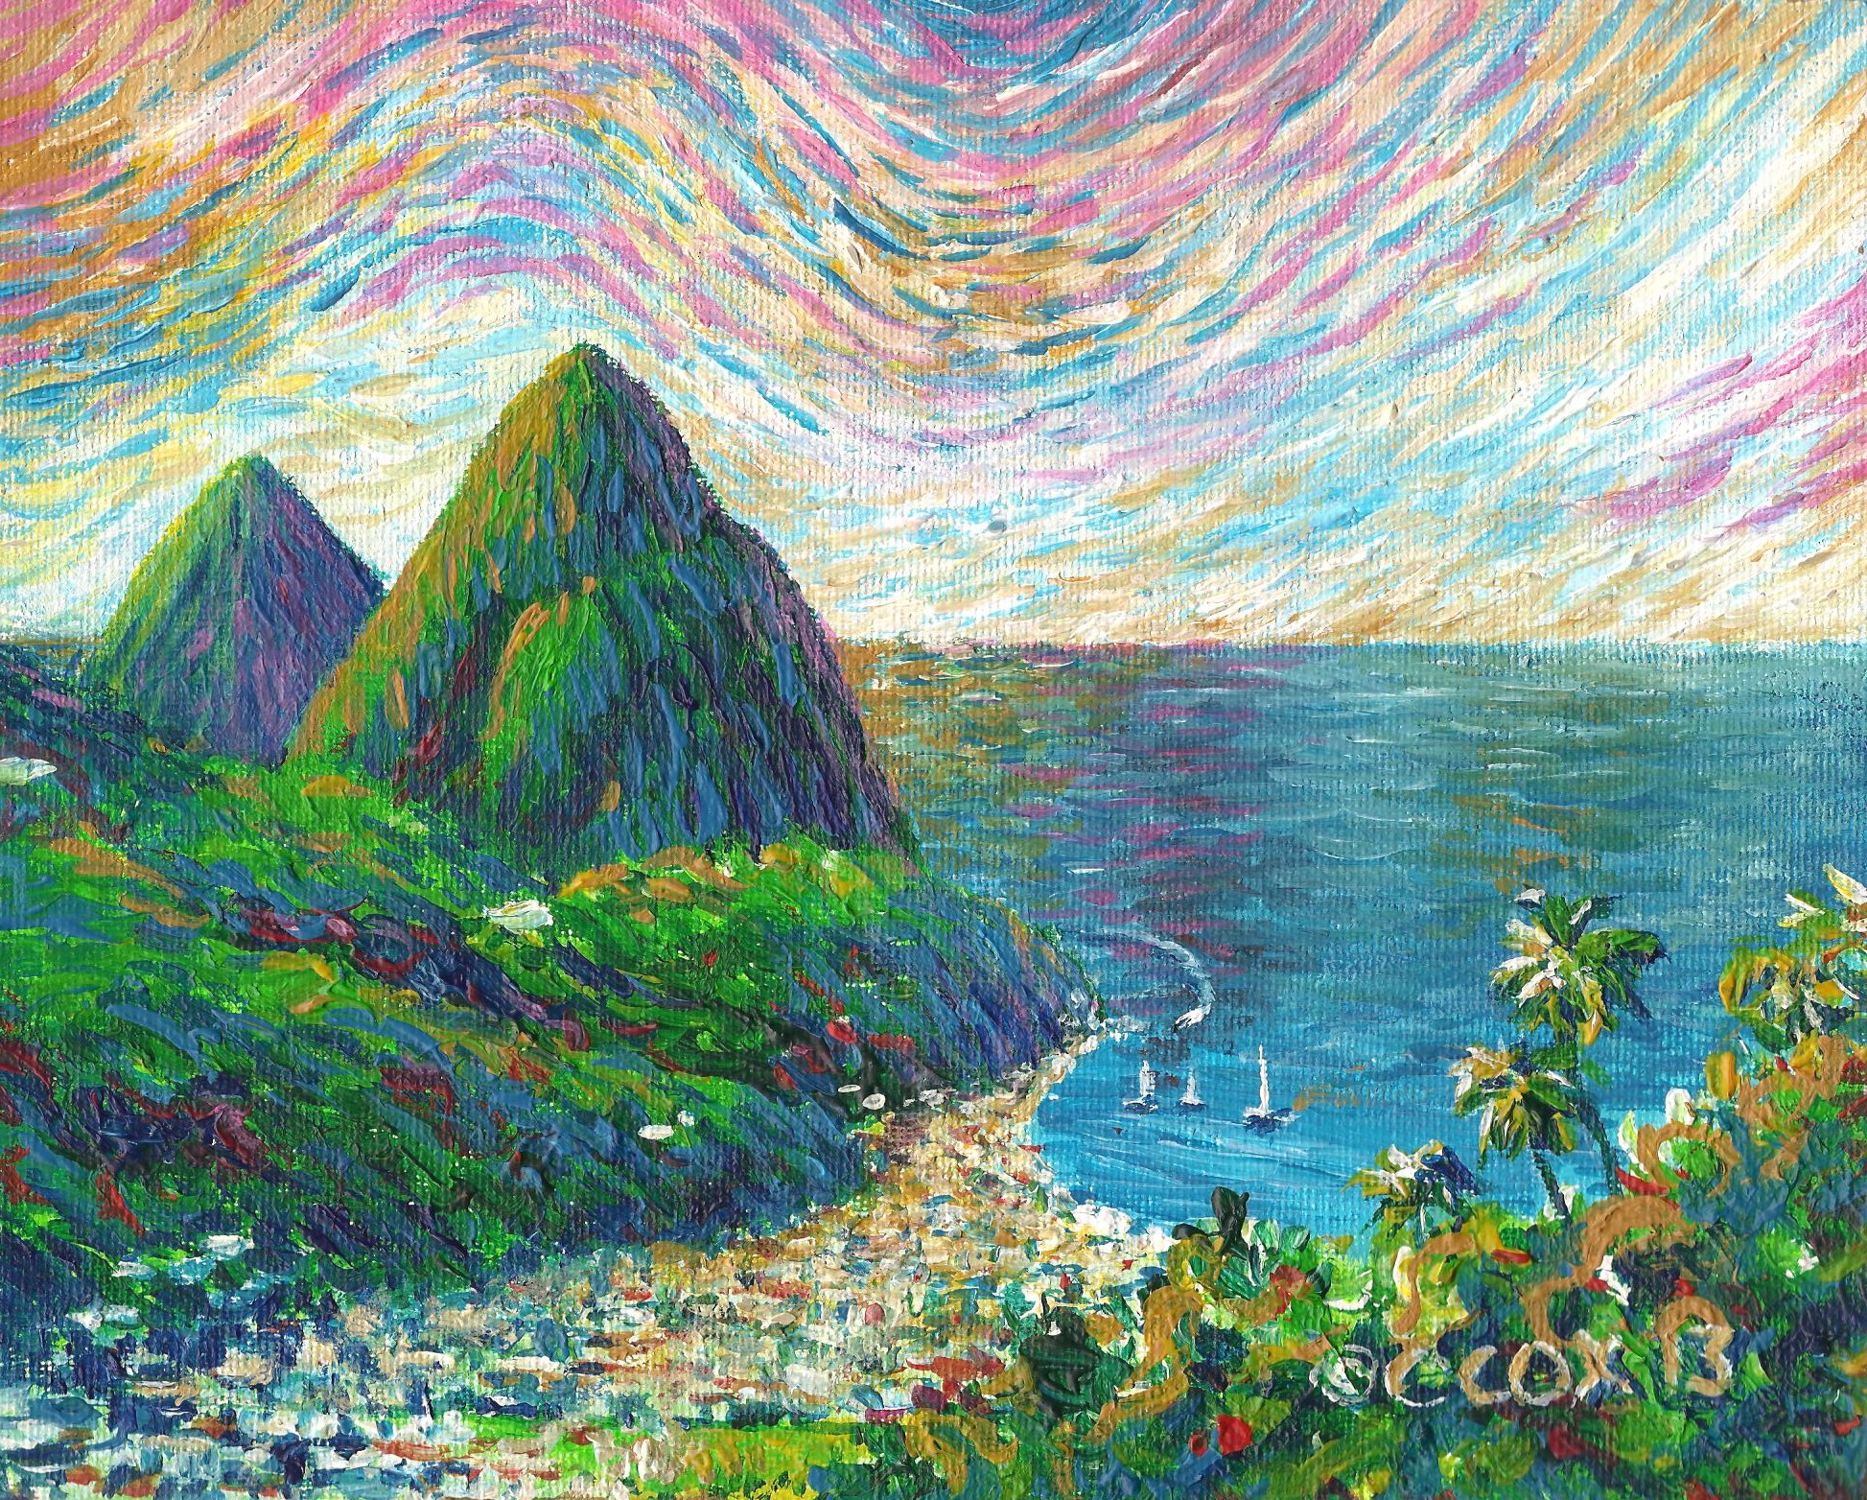 Soufriere Bay, Saint Lucia. Acrylic on canvasboard, 8x10"